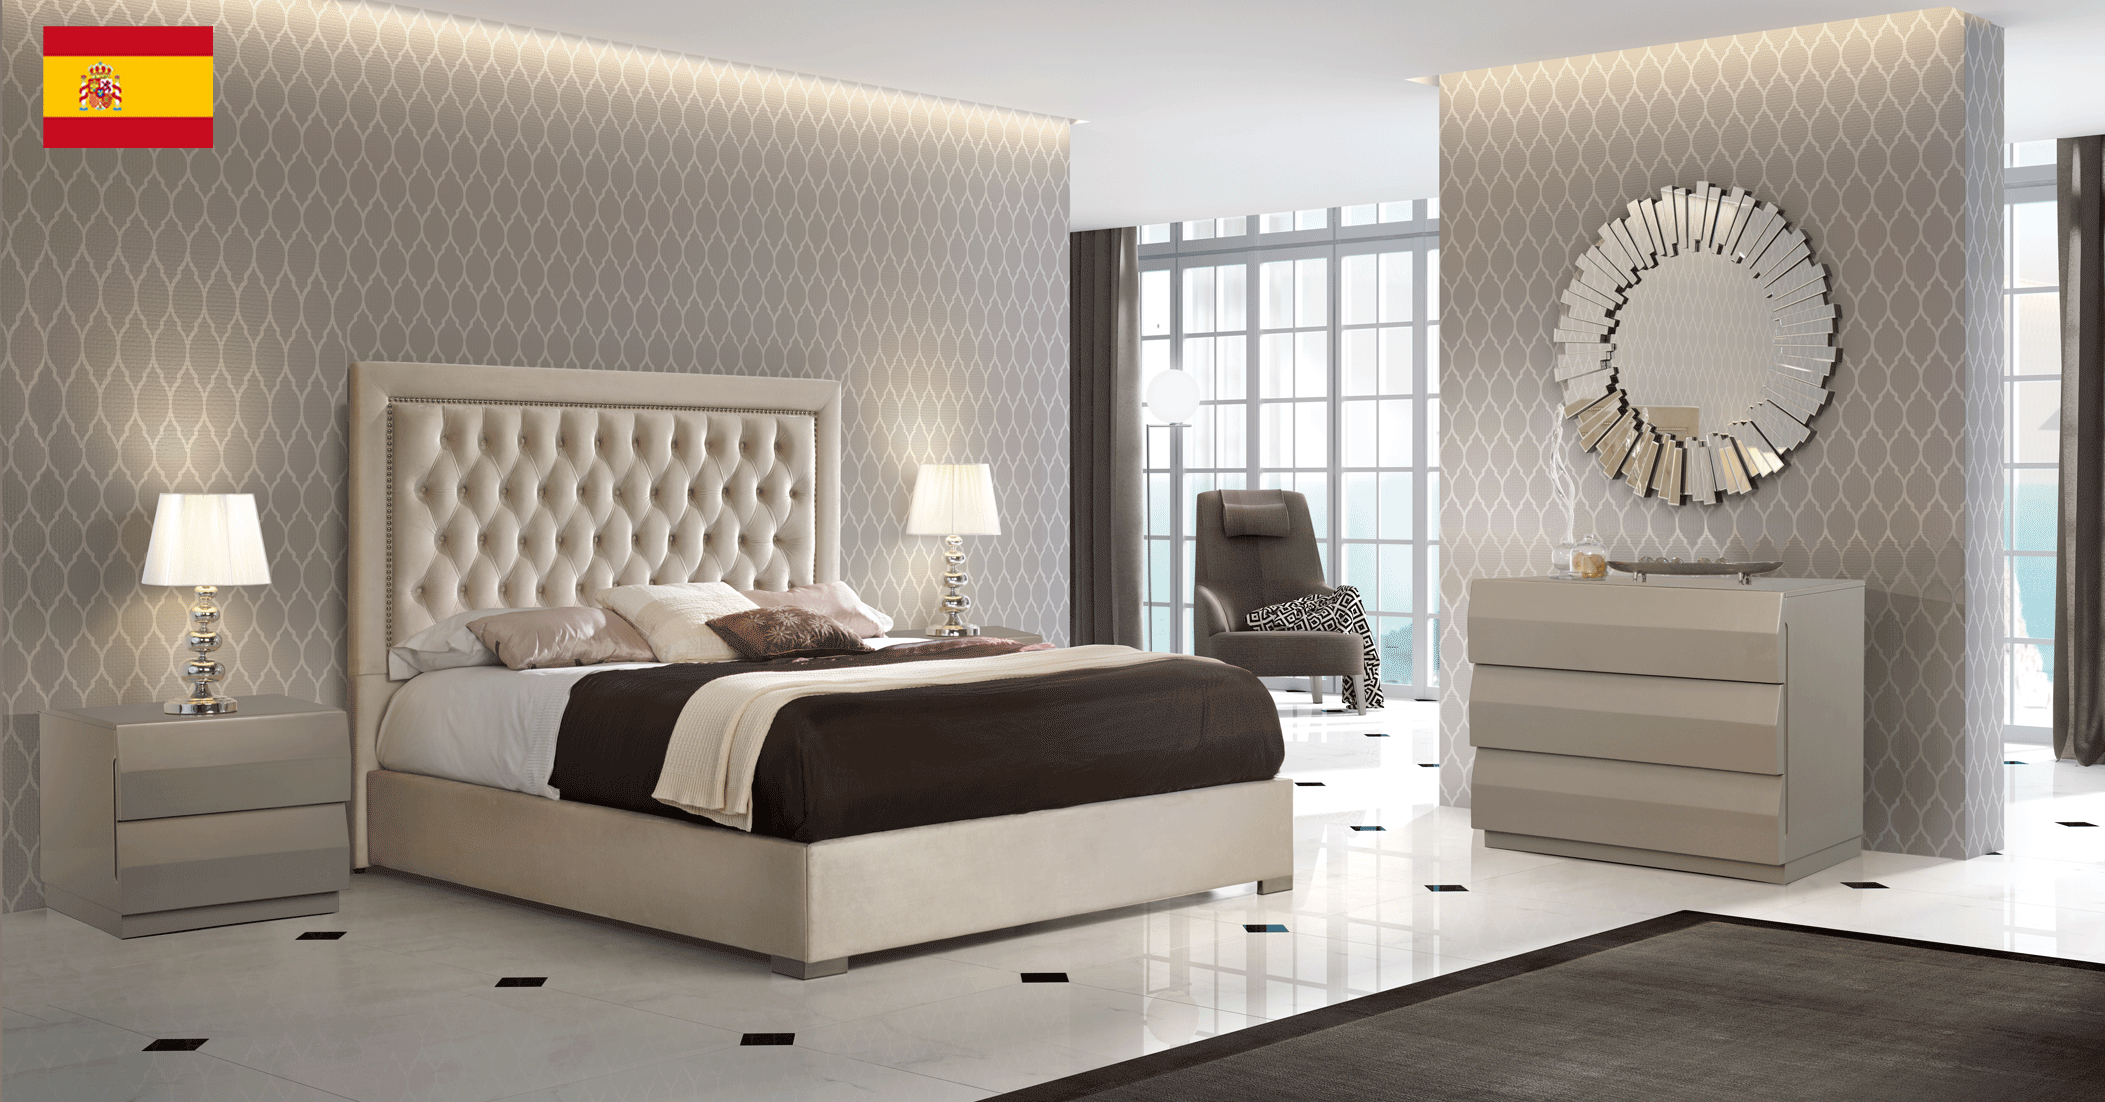 Bedroom Furniture Classic Bedrooms QS and KS Adagio Bedroom w/Storage, M152, C152, E100